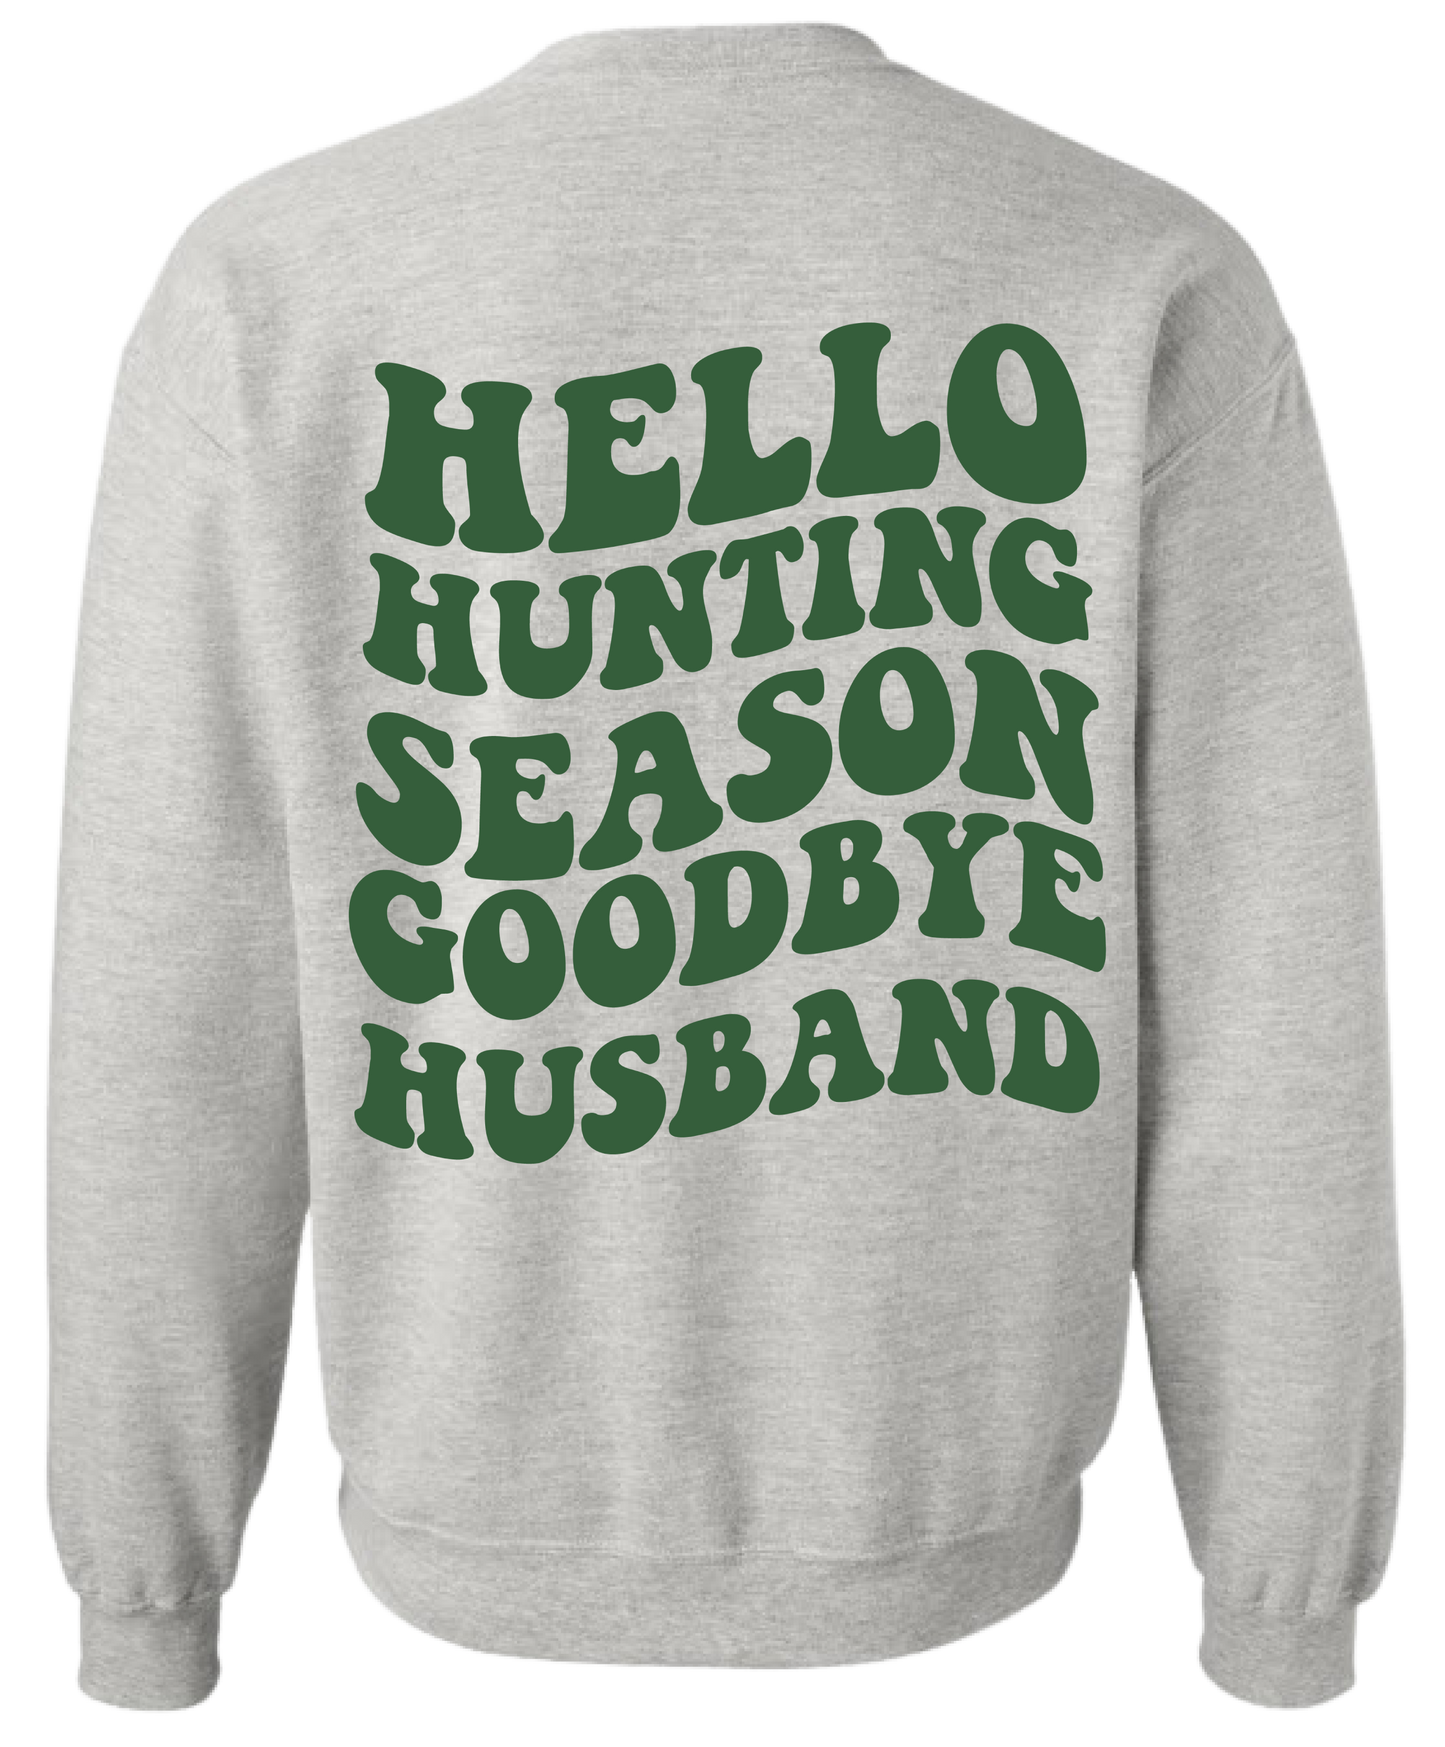 Hello Hunting Season Goodbye Husband Crewneck